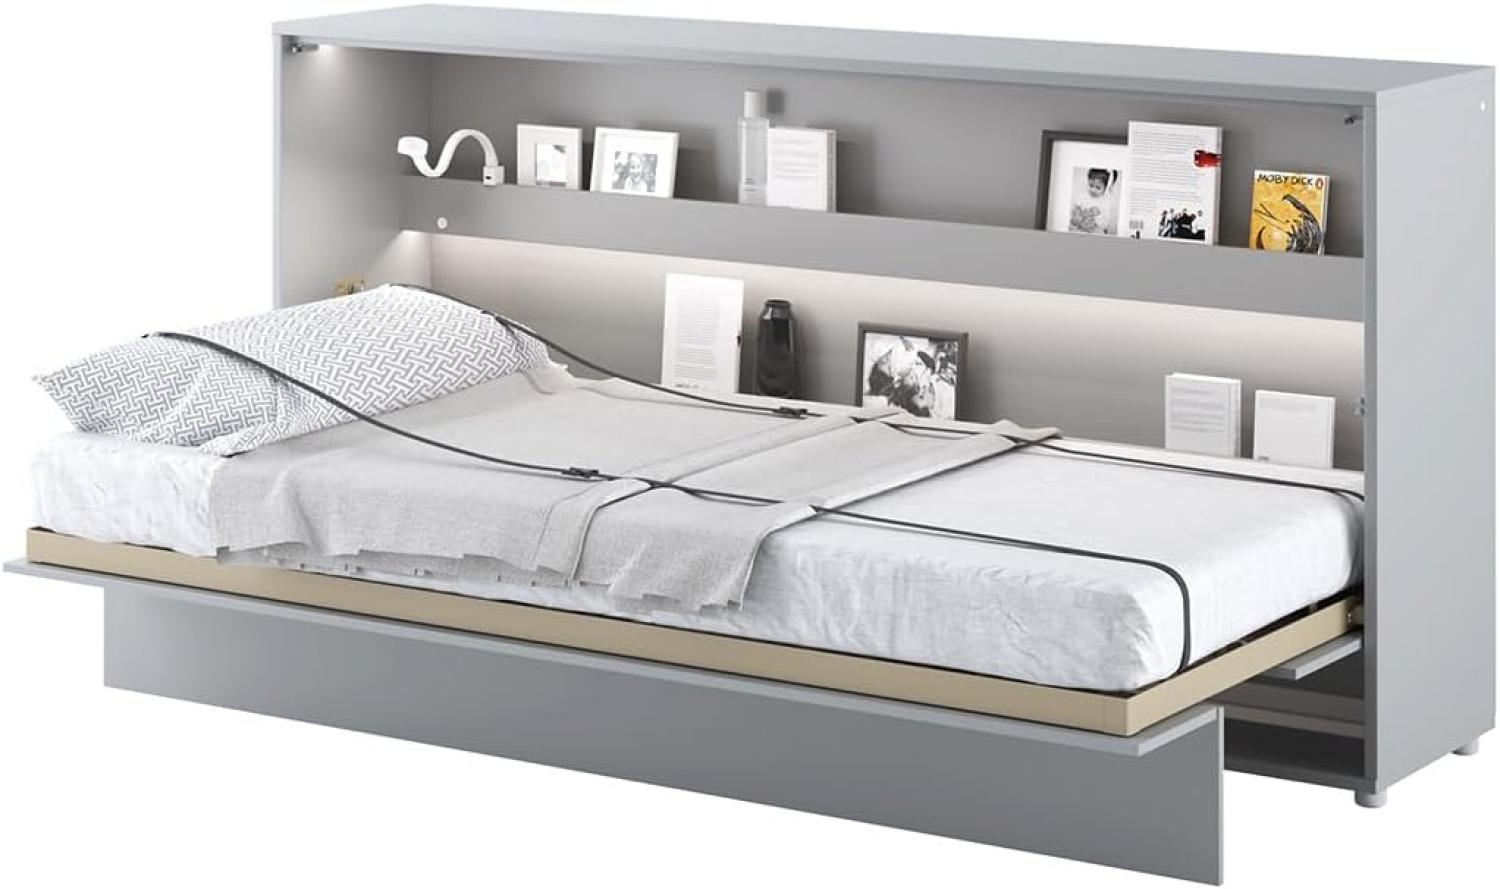 MEBLINI Schrankbett Bed Concept - Wandbett mit Lattenrost - Klappbett mit Schrank - Wandklappbett - Murphy Bed - Bettschrank - BC-06 - 90x200cm Horizontal - Grau Matt Bild 1